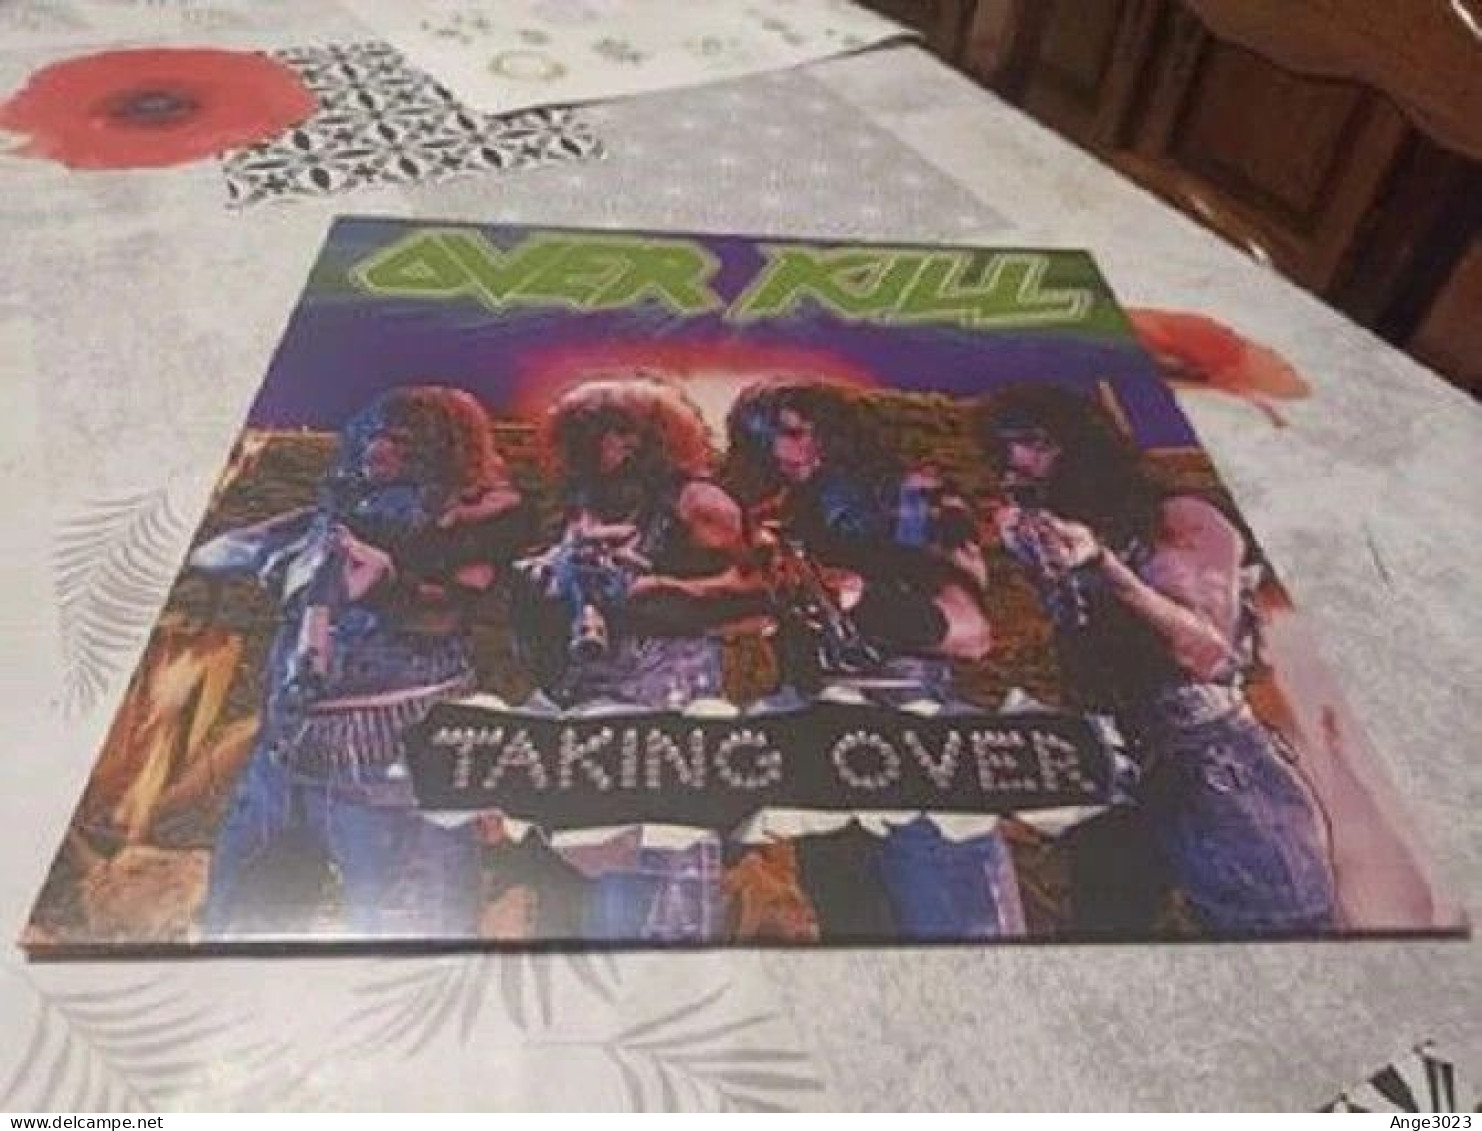 OVERKILL "Taking Over" +++ - Hard Rock & Metal